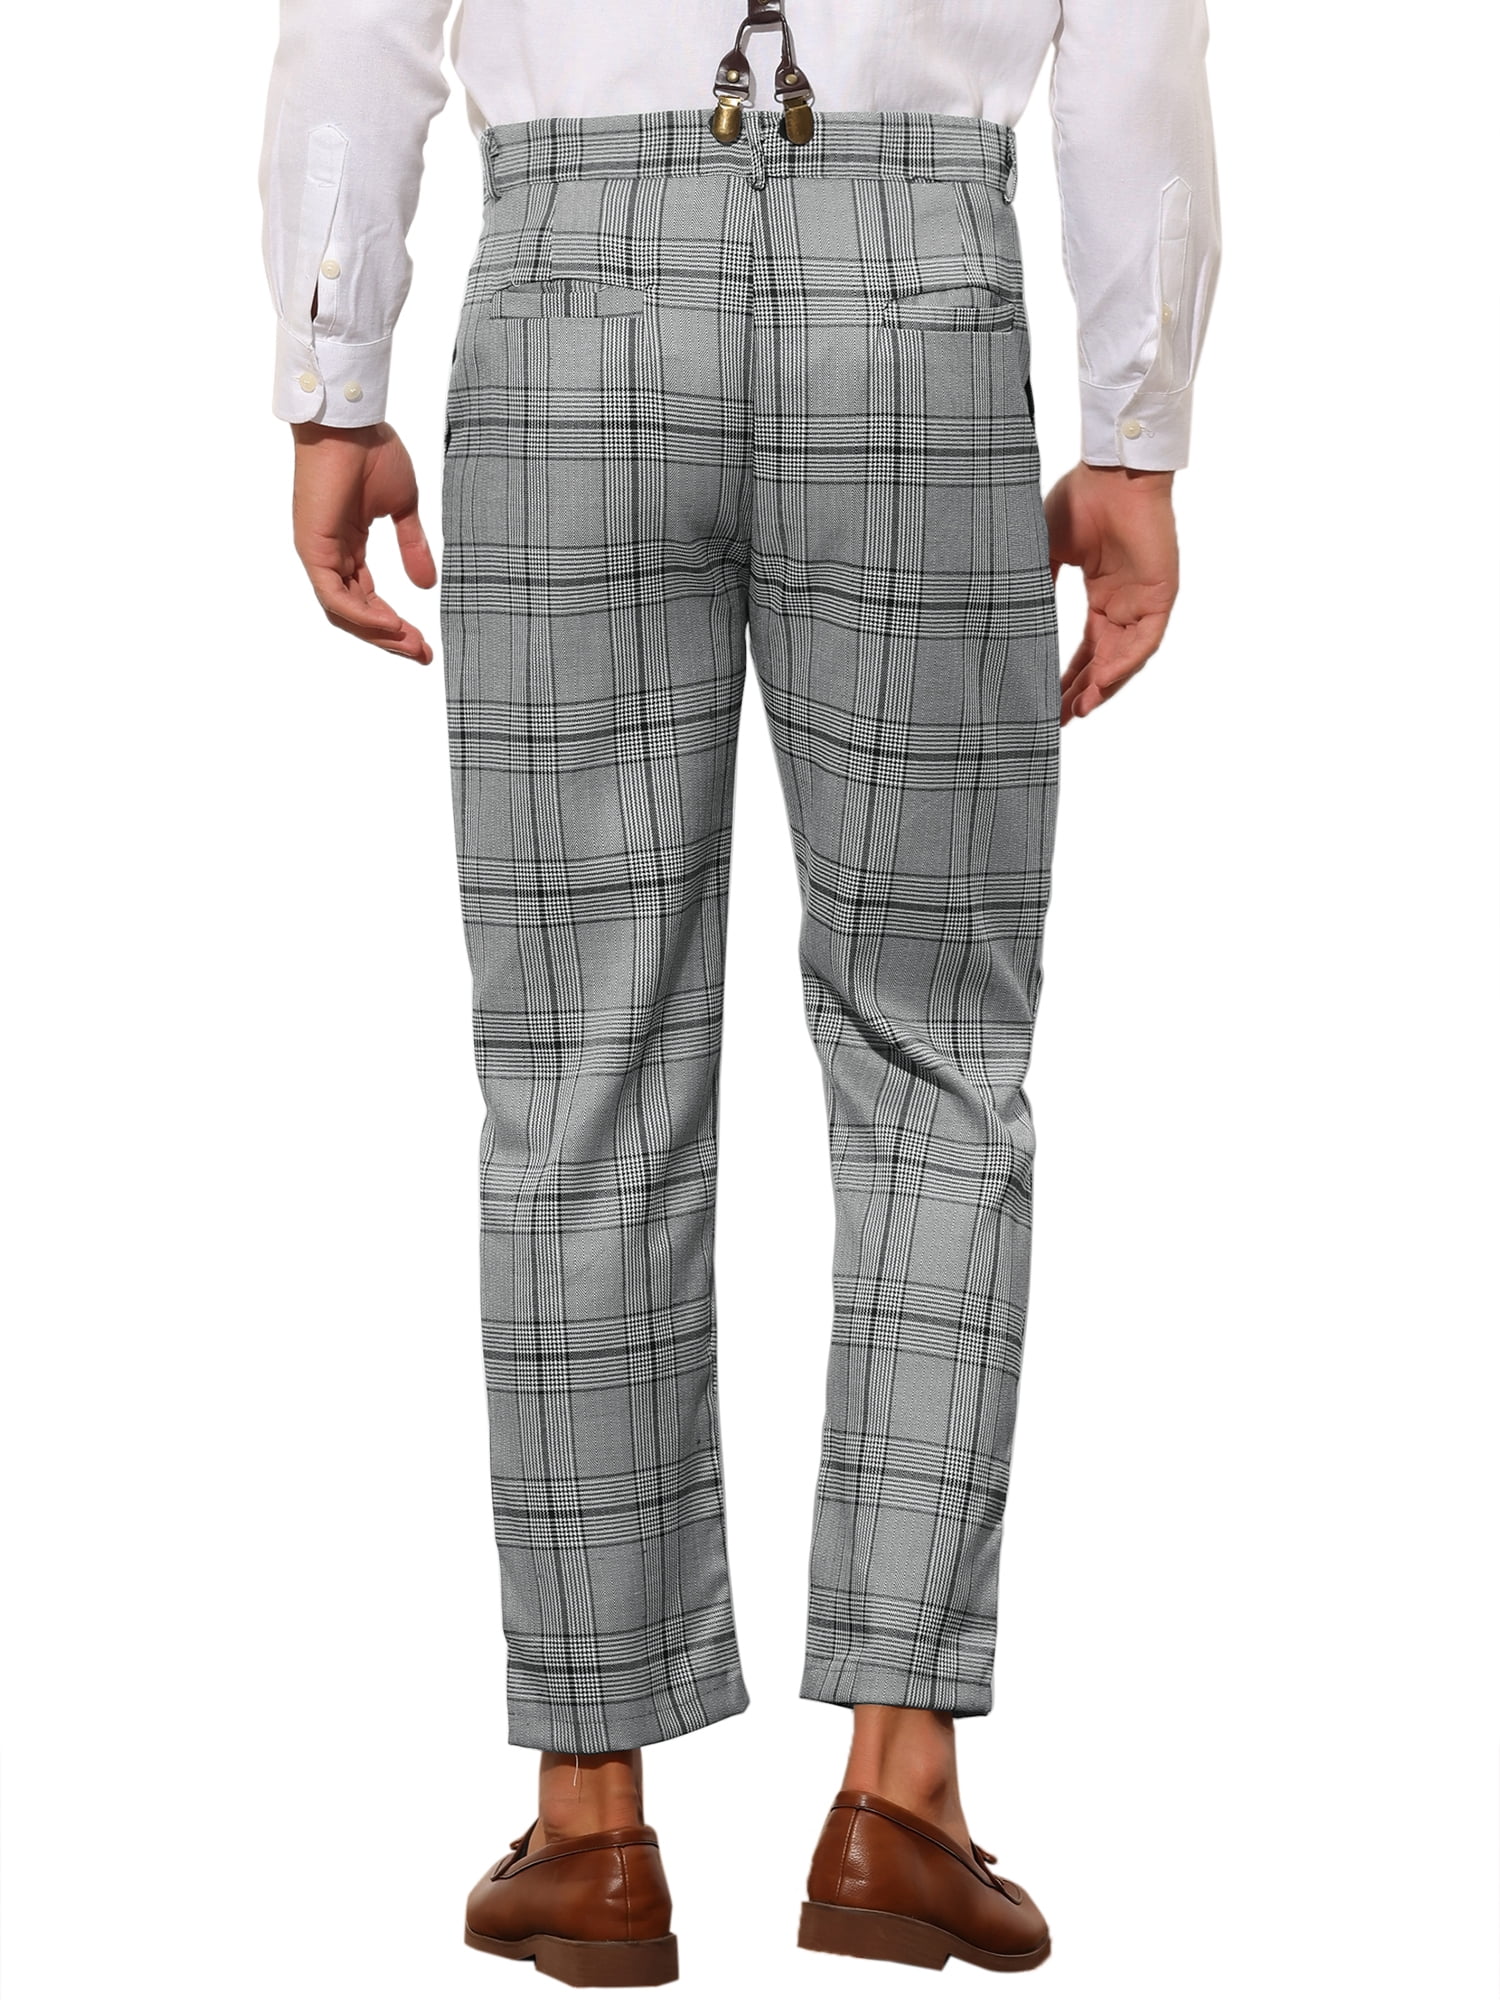 Lars Amadeus Men's Checked Dress Pants Business Plaid Pants with Suspenders